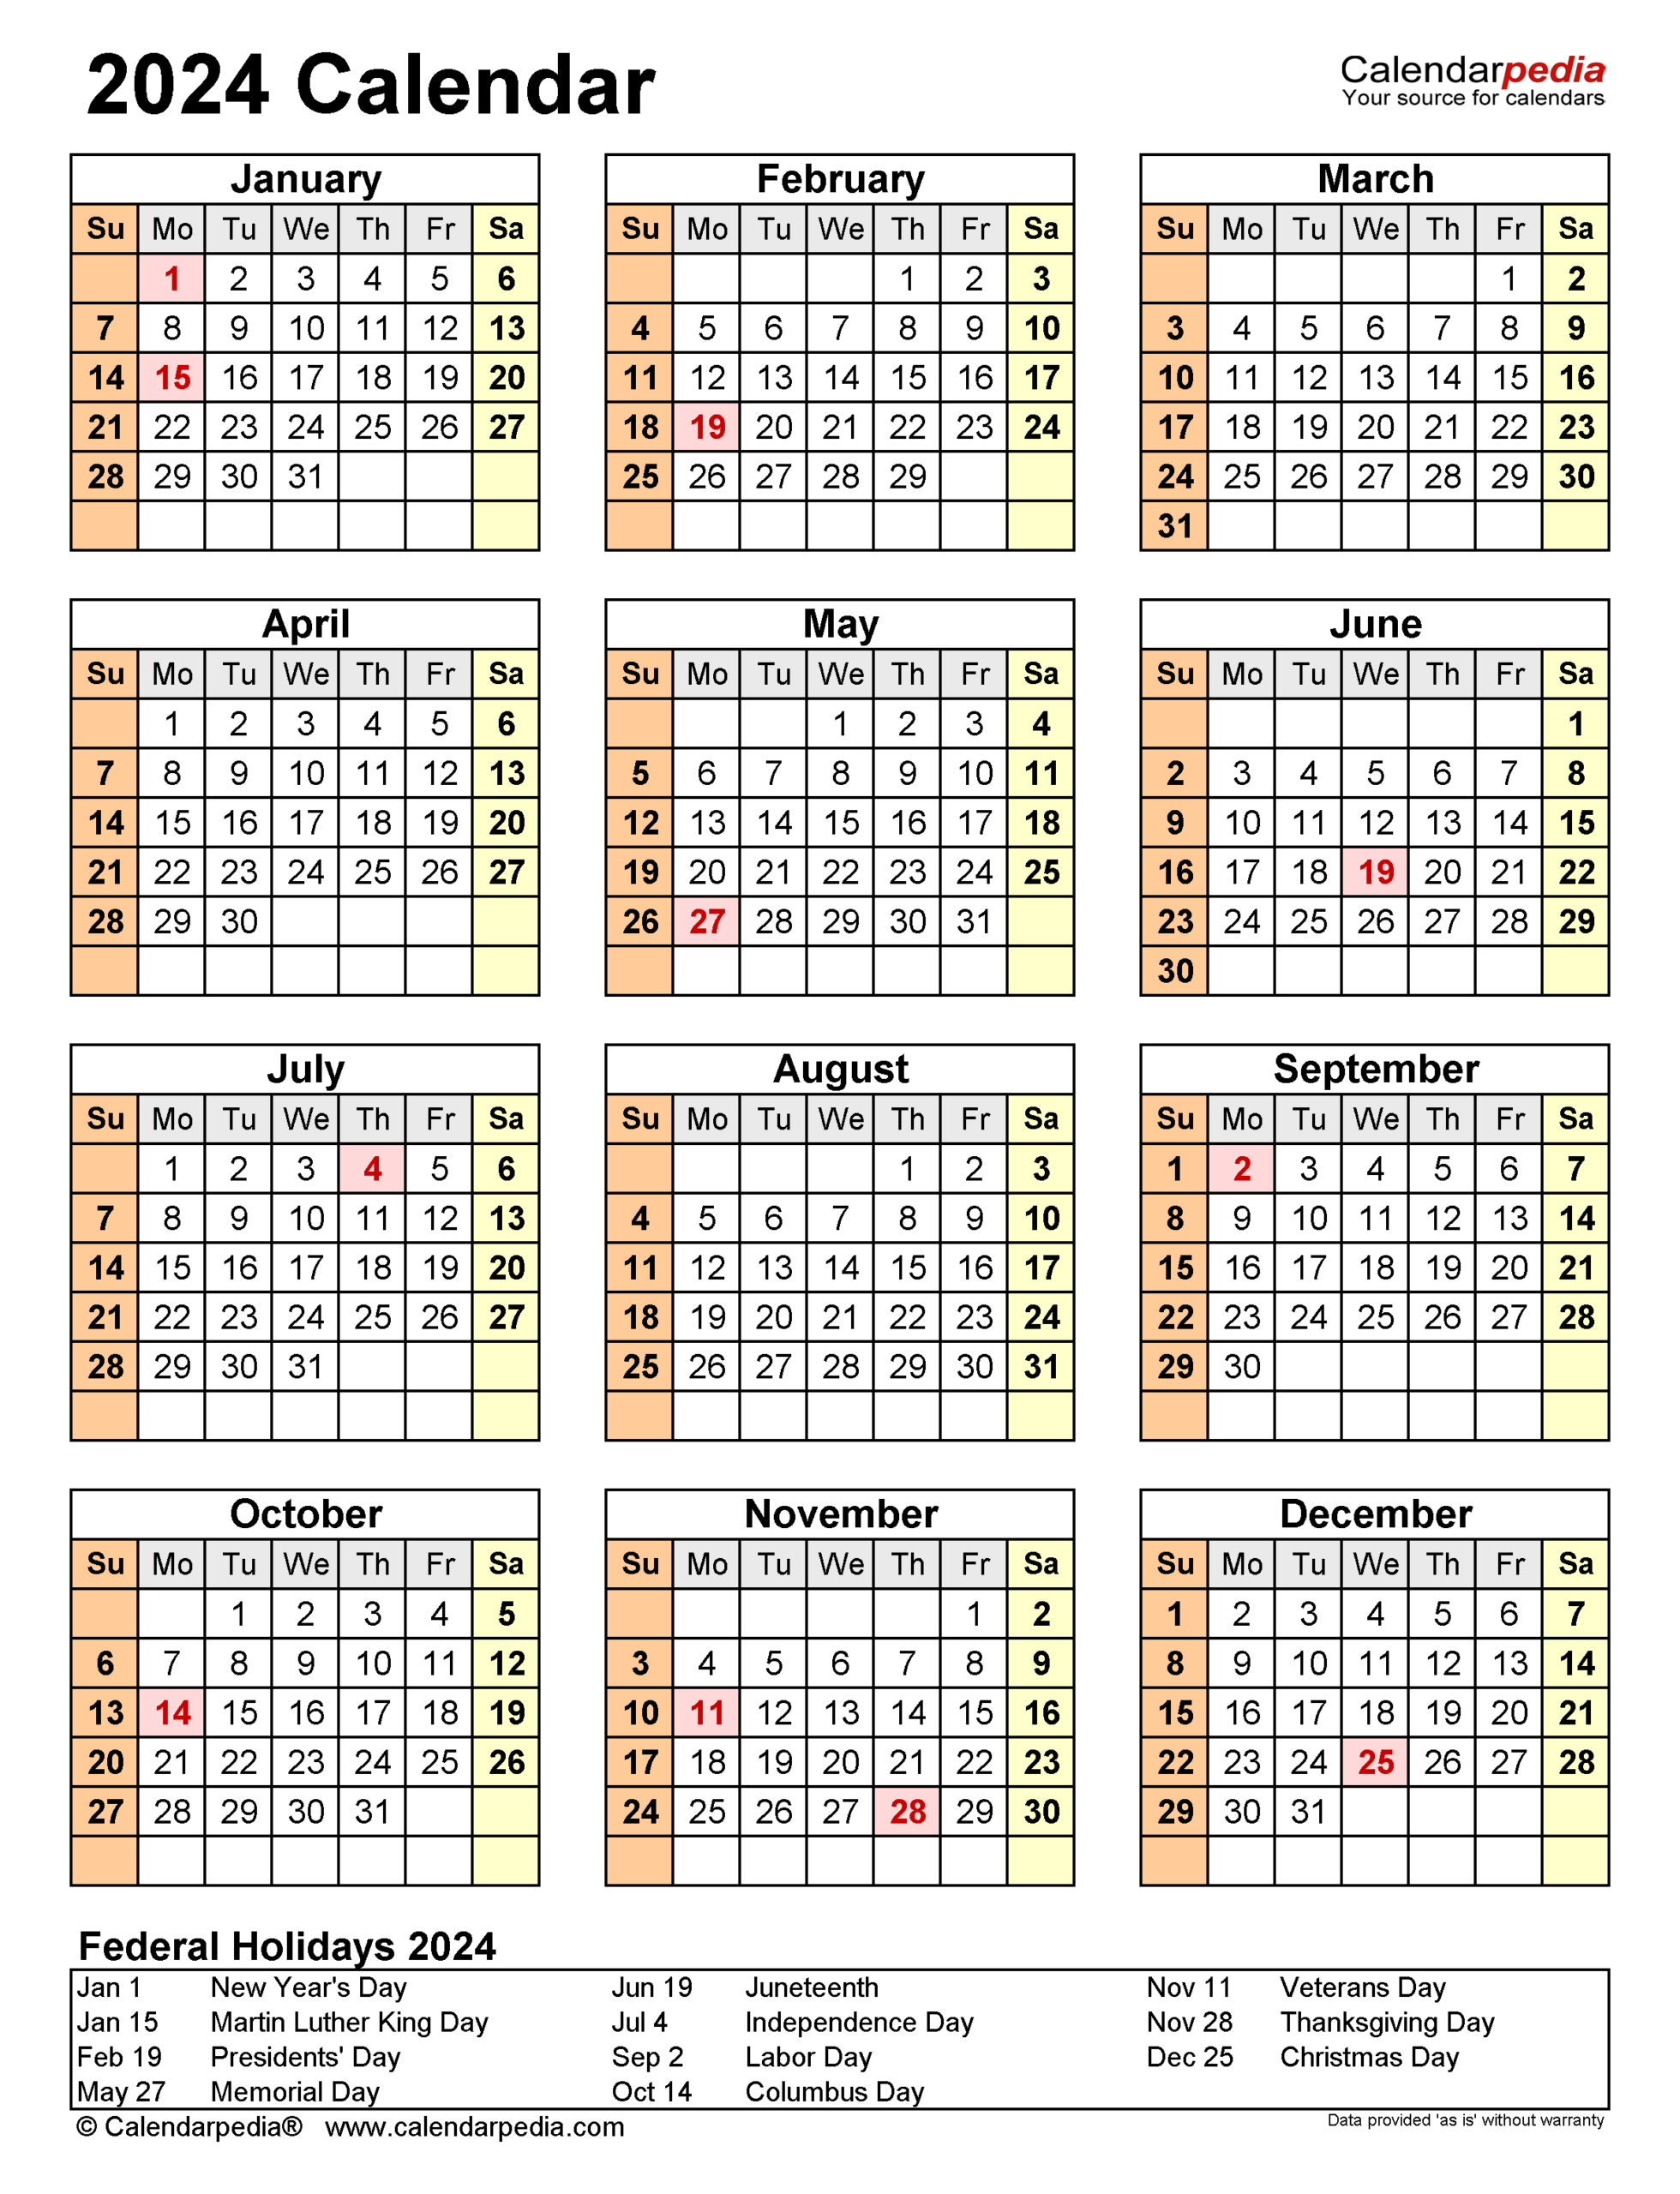 2024 Calendar - Free Printable Excel Templates - Calendarpedia | 2024 Annual Leave Calendar